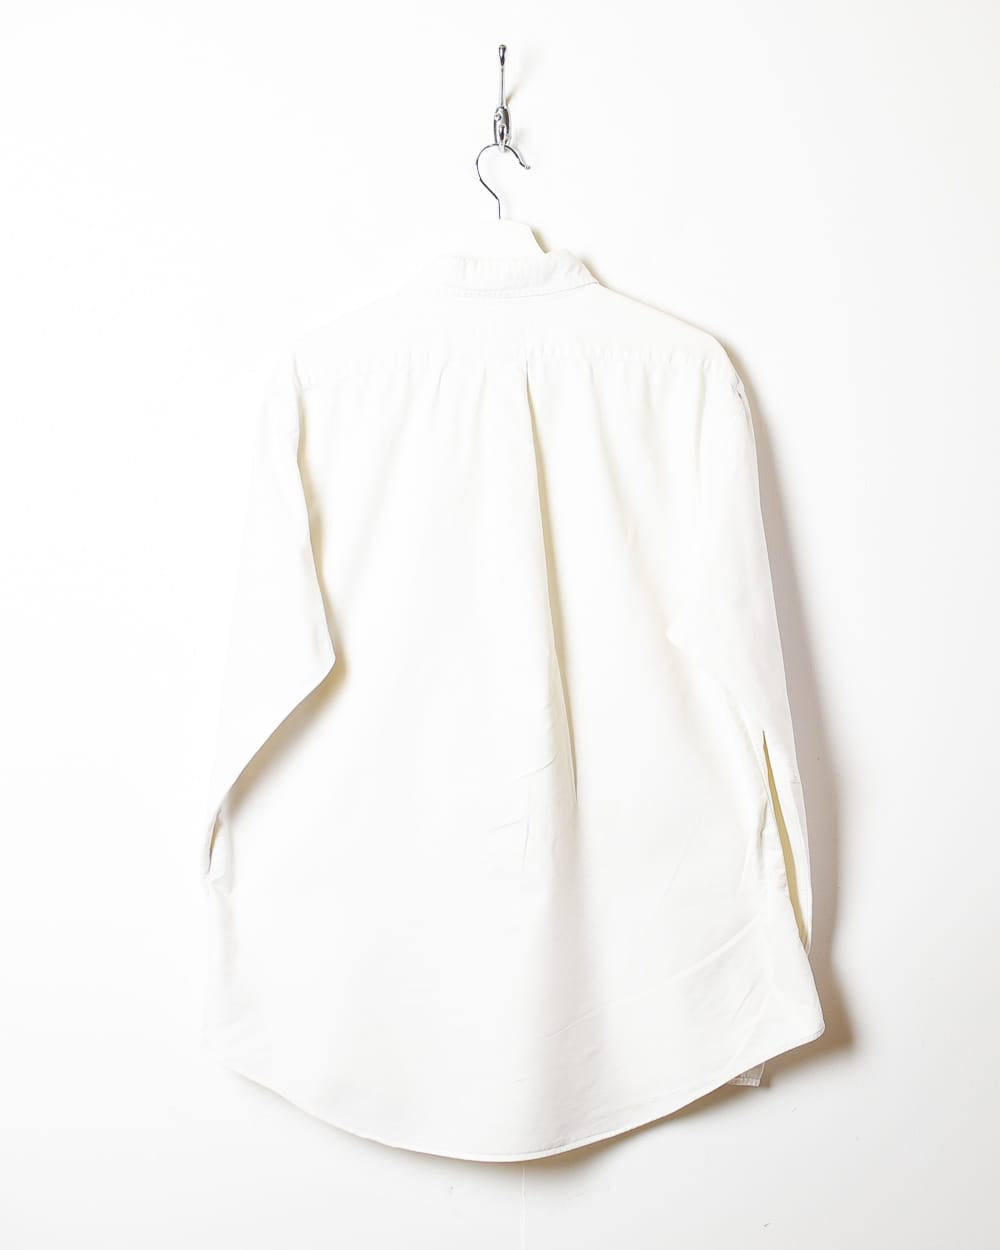 White Polo Ralph Lauren Shirt - X-Large